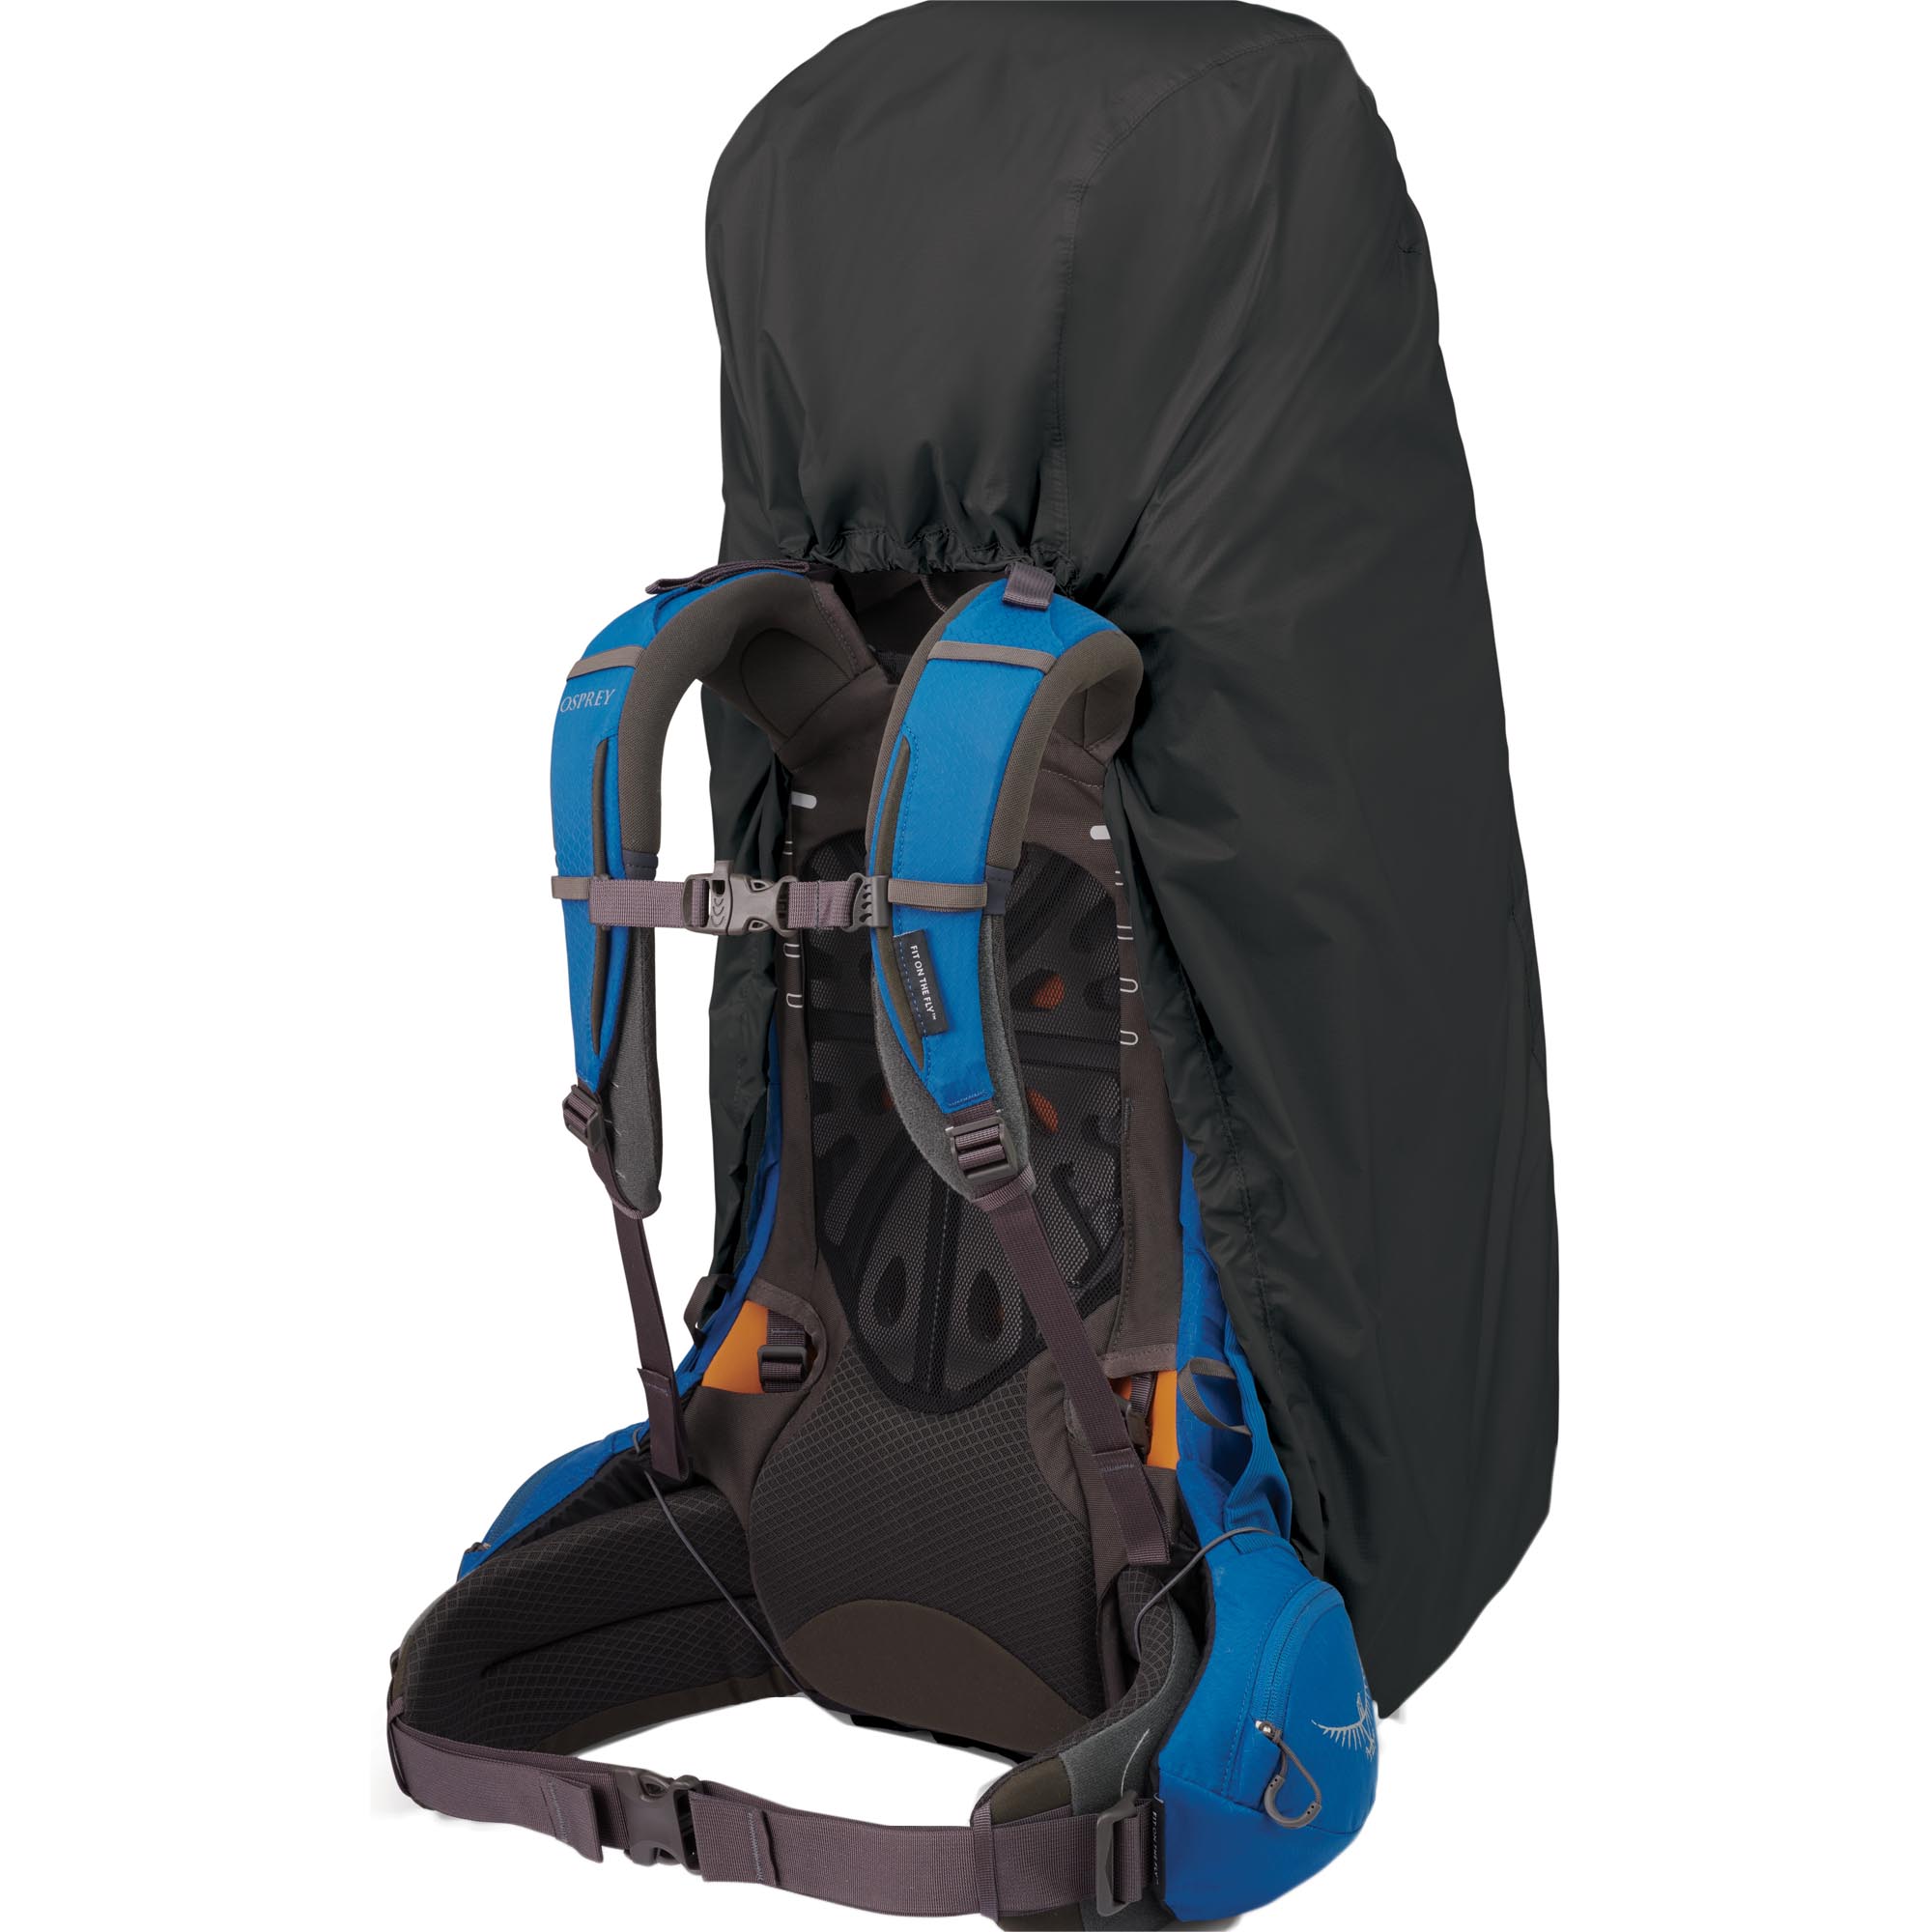 Osprey Ultralight L Waterproof Backpack Raincover